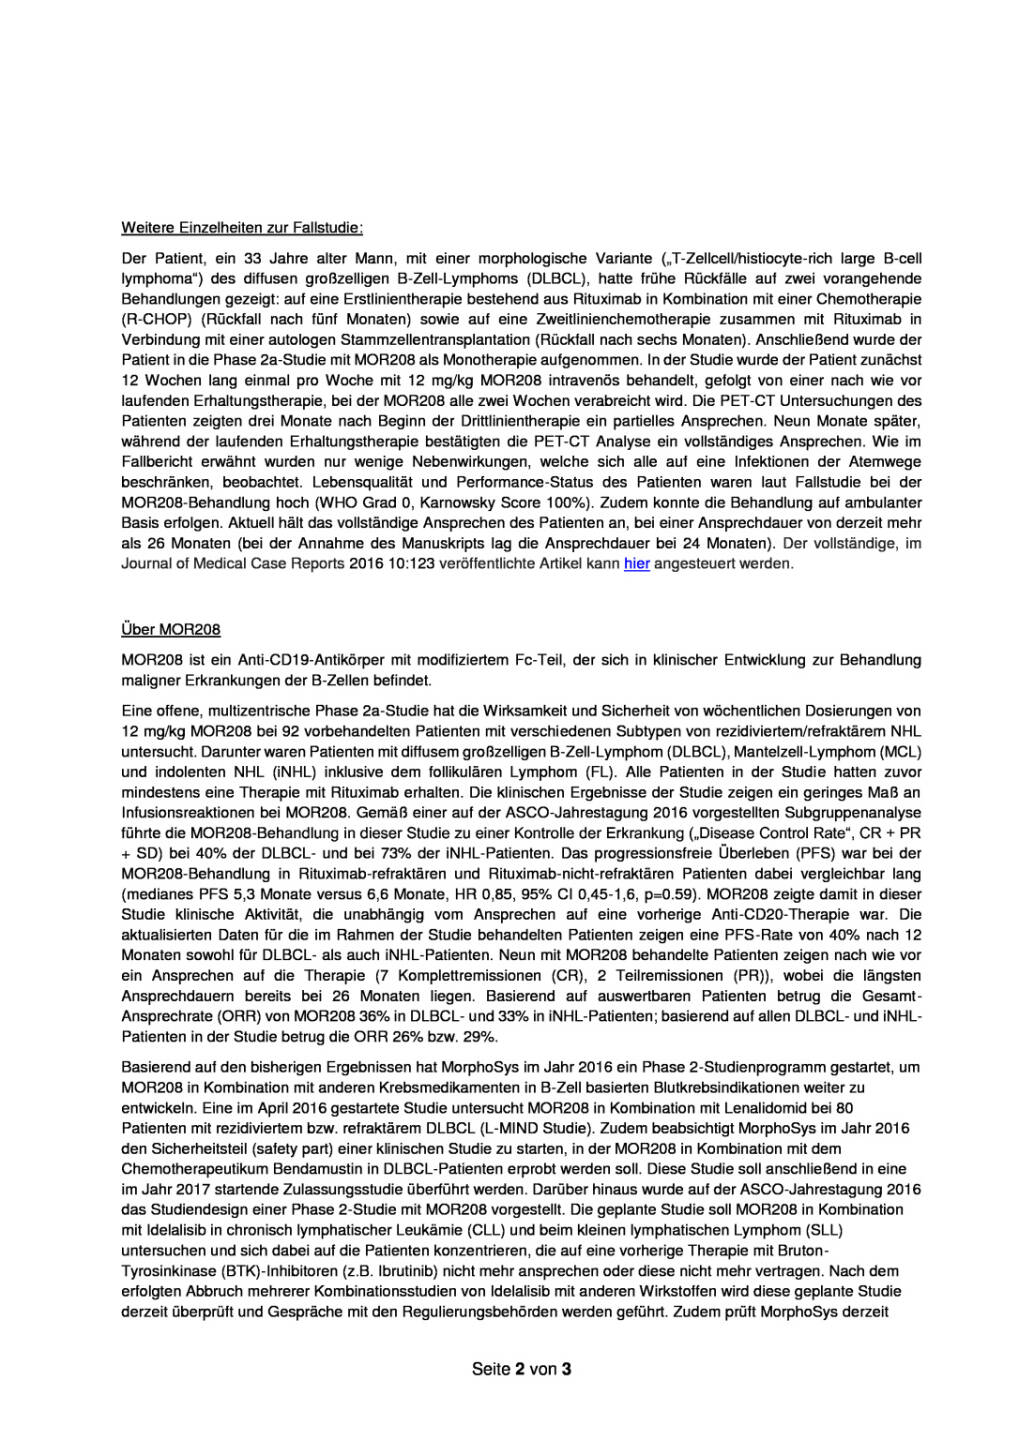 MorphoSys: Klinische Fallstudie zu Wirkstoff MOR208, Seite 2/3, komplettes Dokument unter http://boerse-social.com/static/uploads/file_1228_morphosys_klinische_fallstudie_zu_wirkstoff_mor208.pdf